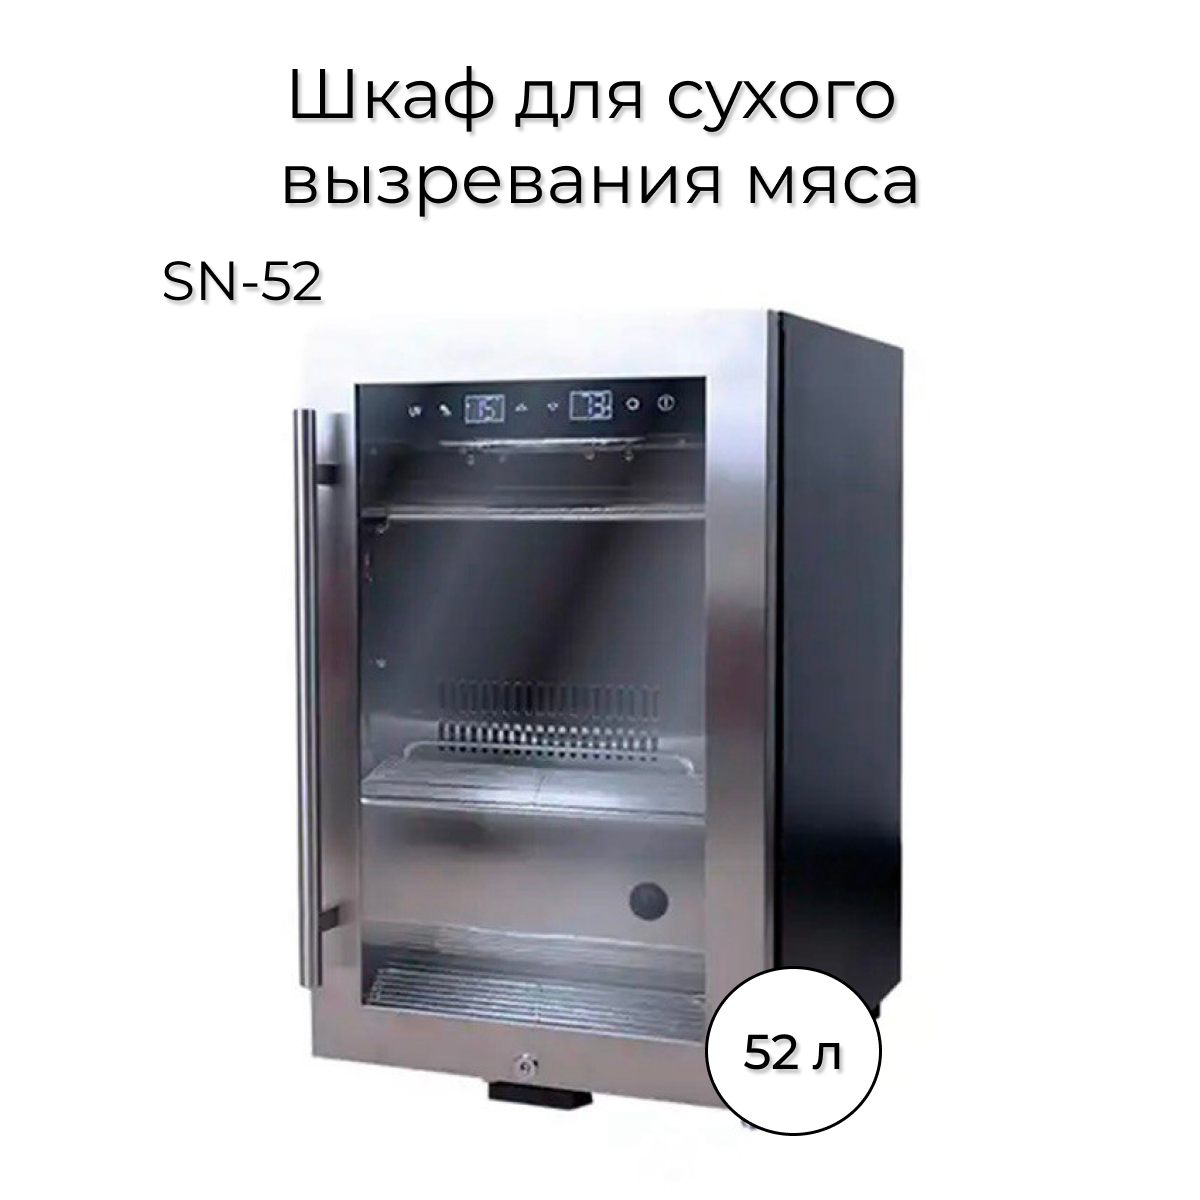 Холодильник Wistora SN-52 серебристый однокамерный холодильник позис rs 416 серебристый металлопласт